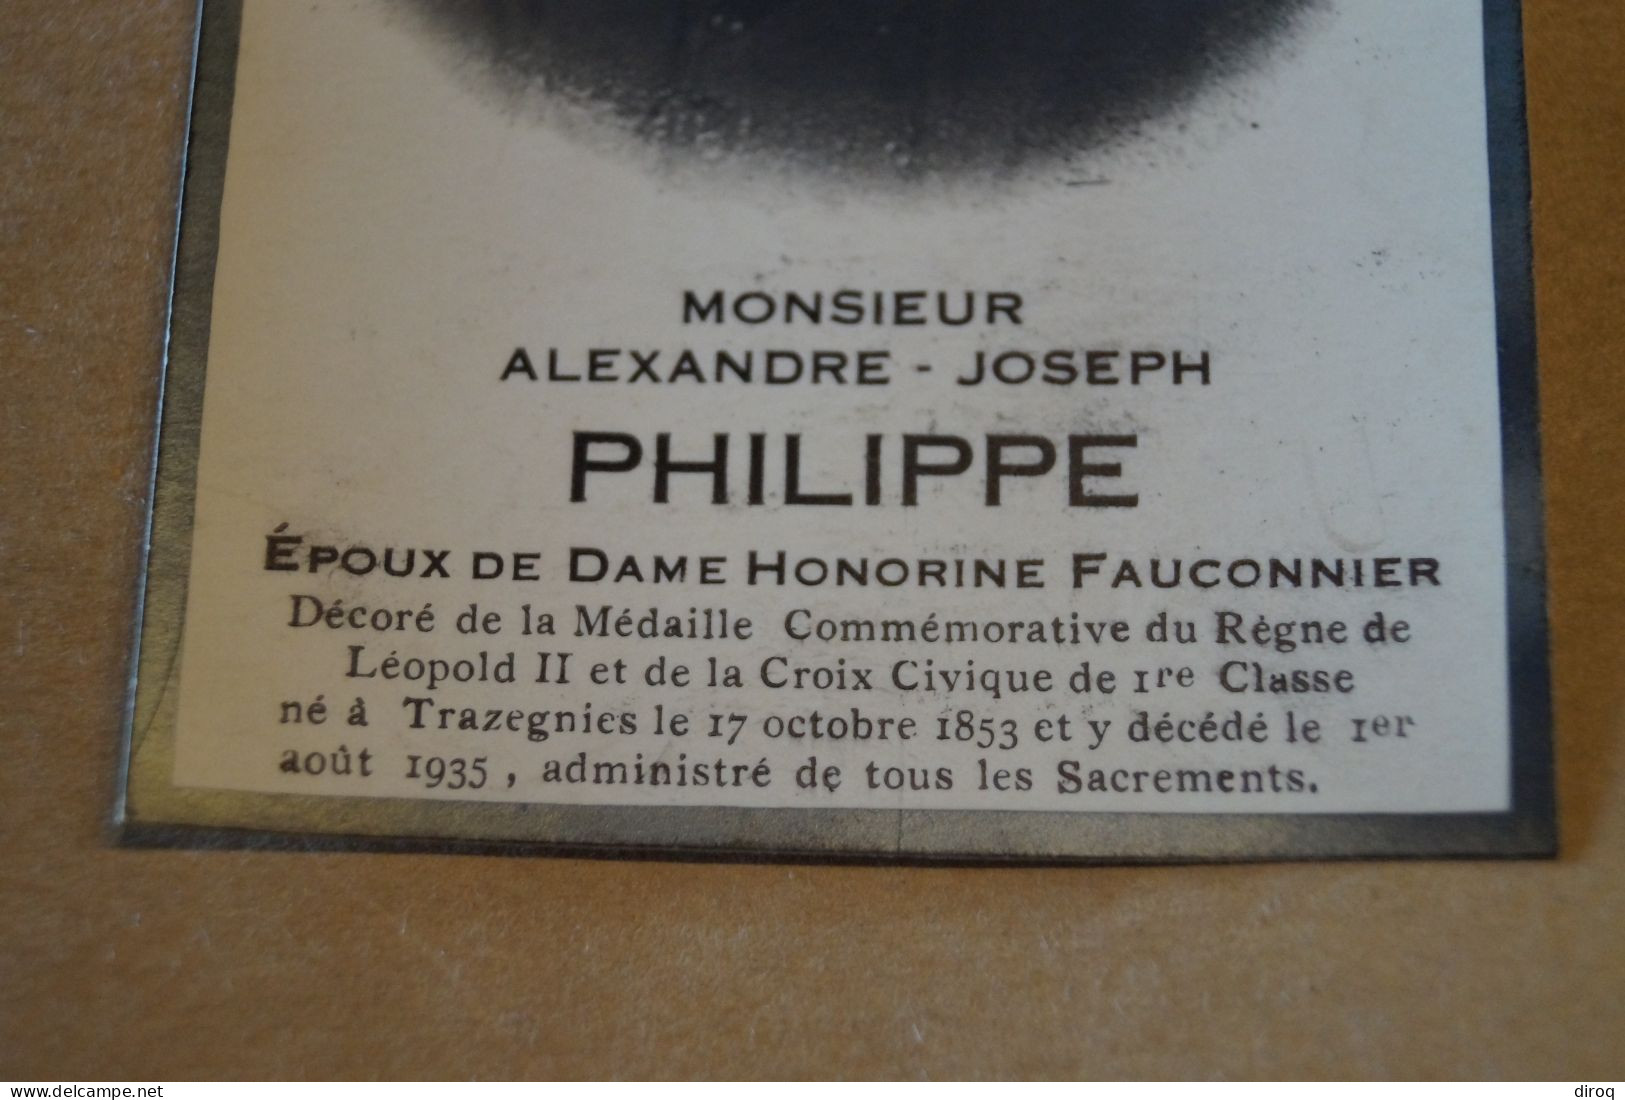 Alexandre-Joseph Philippe,Trazegnies 1853 - 1935 - Obituary Notices